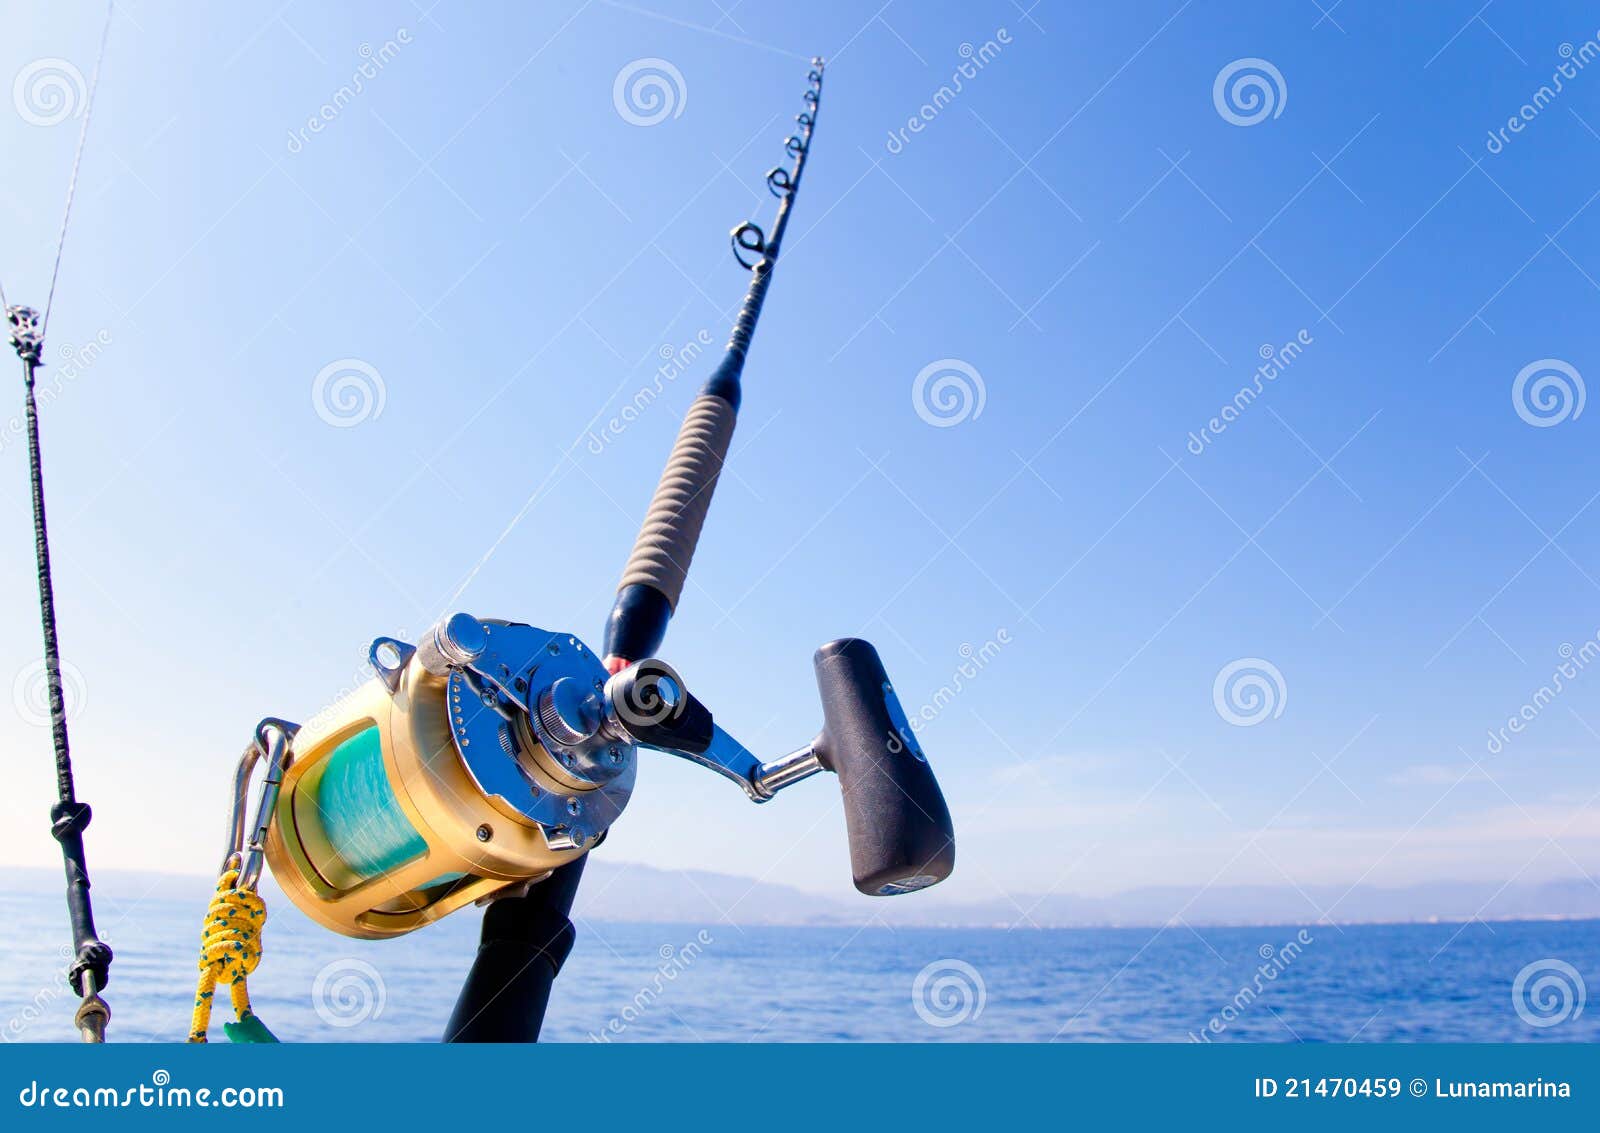 Ocean Fishing Reels On A Boat In The Ocean Stock Photo - Download